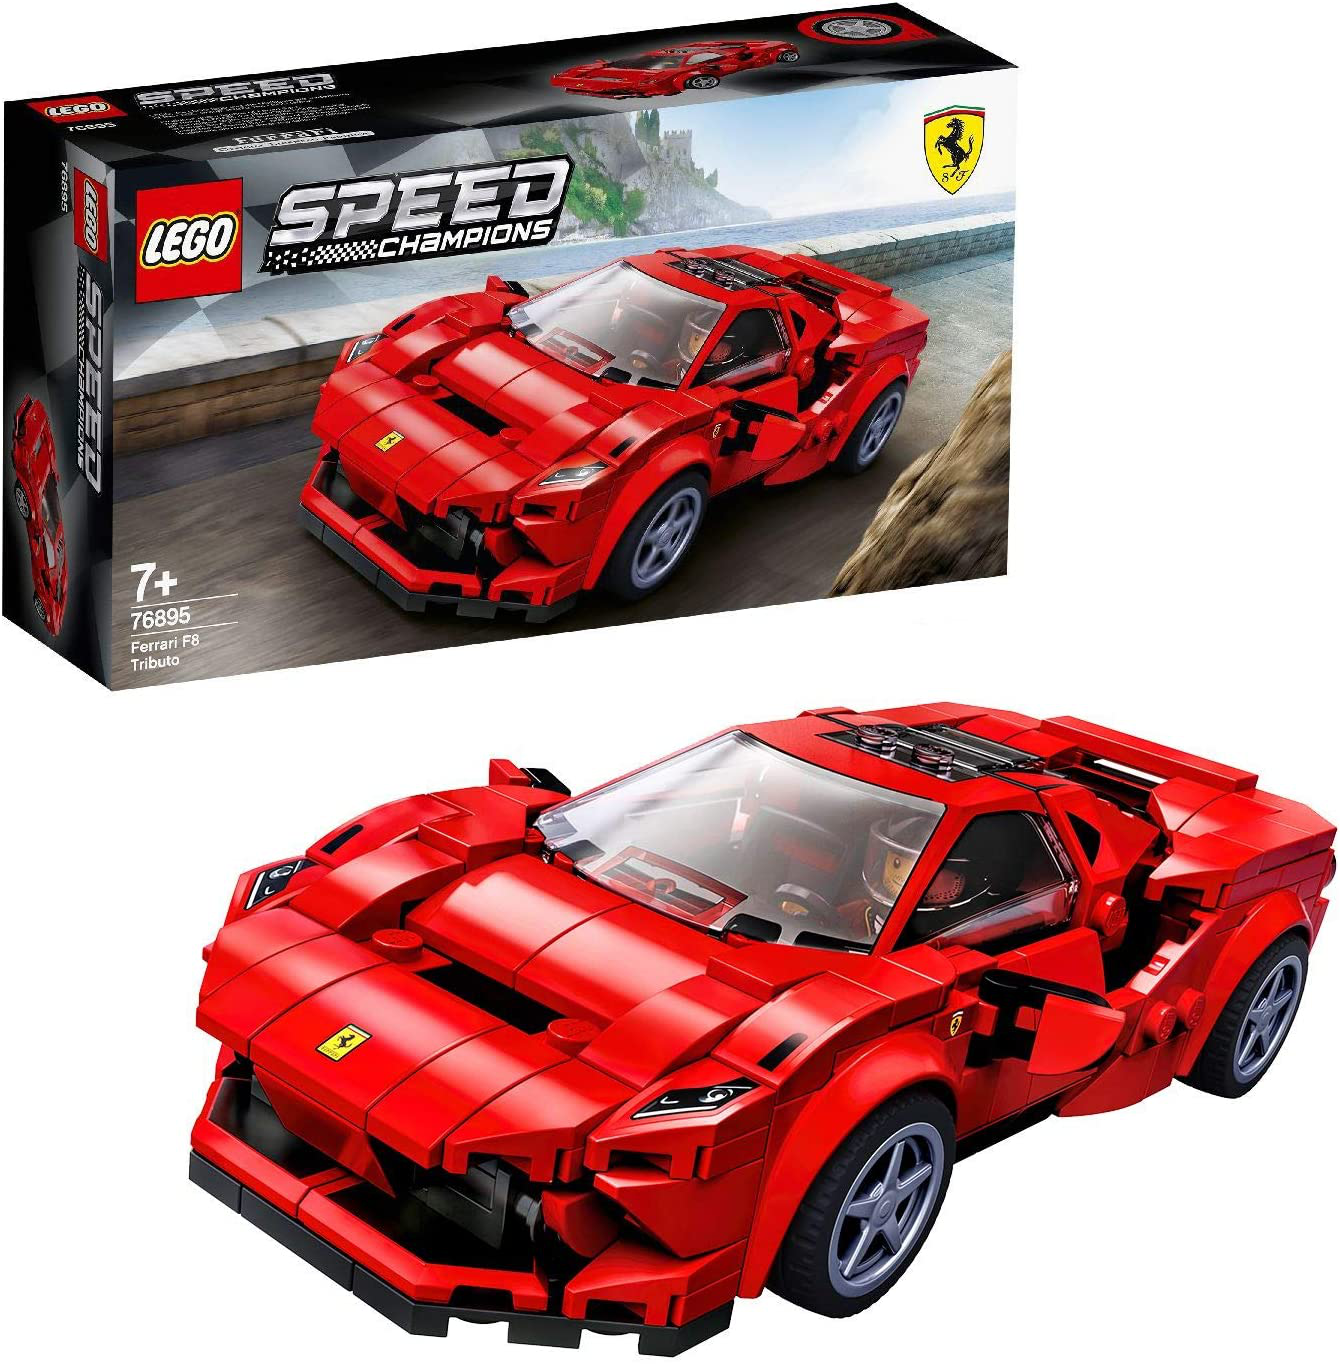 LEGO SPEED CHAMPIONS FERRARI F8 TRIBUTO